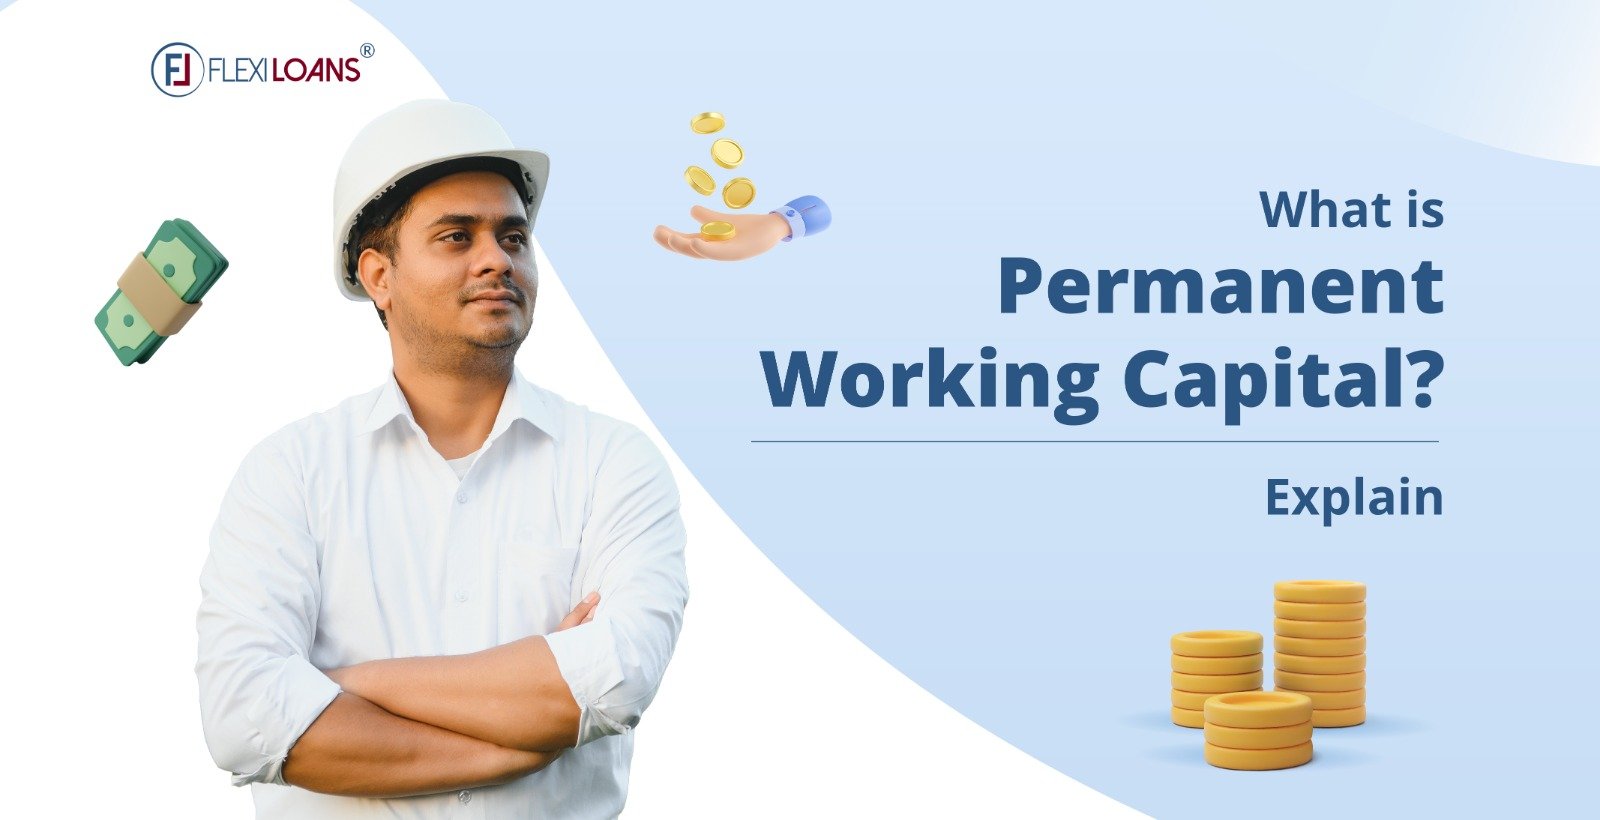 Permanent working capital